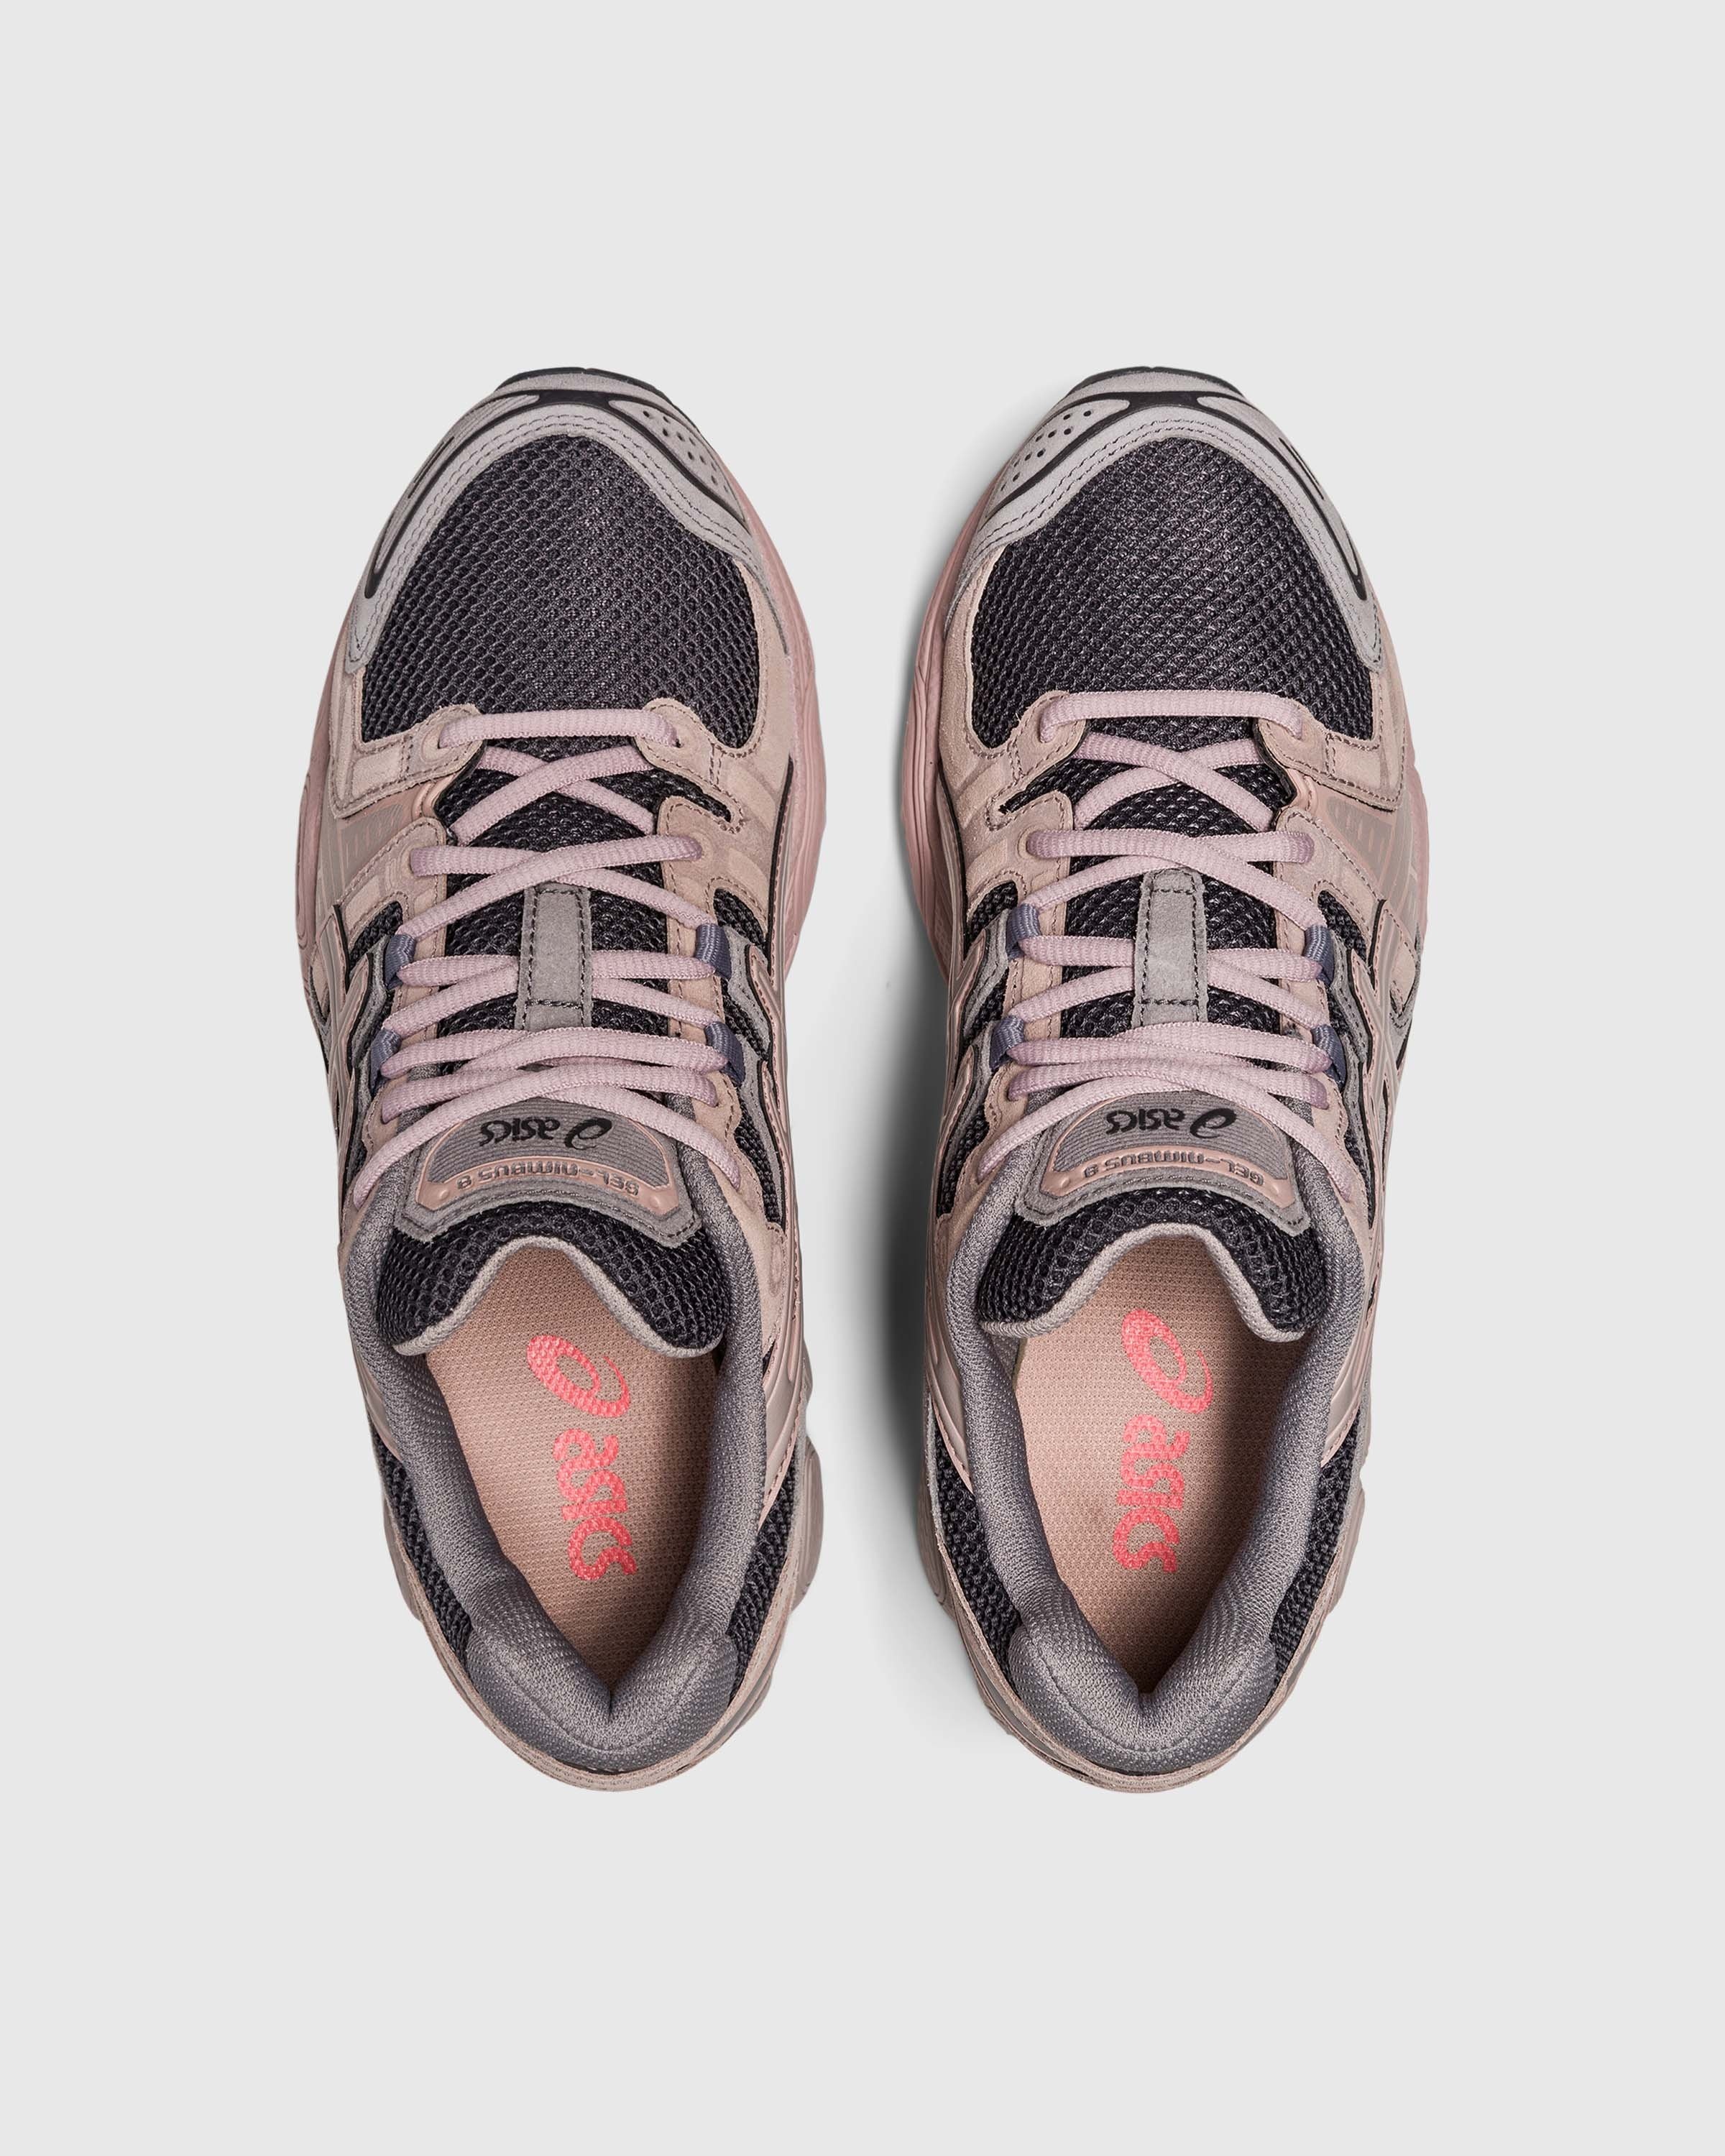 asics – GEL-NIMBUS 9 Obsidian Grey/Moonrock - Low Top Sneakers - Pink - Image 5